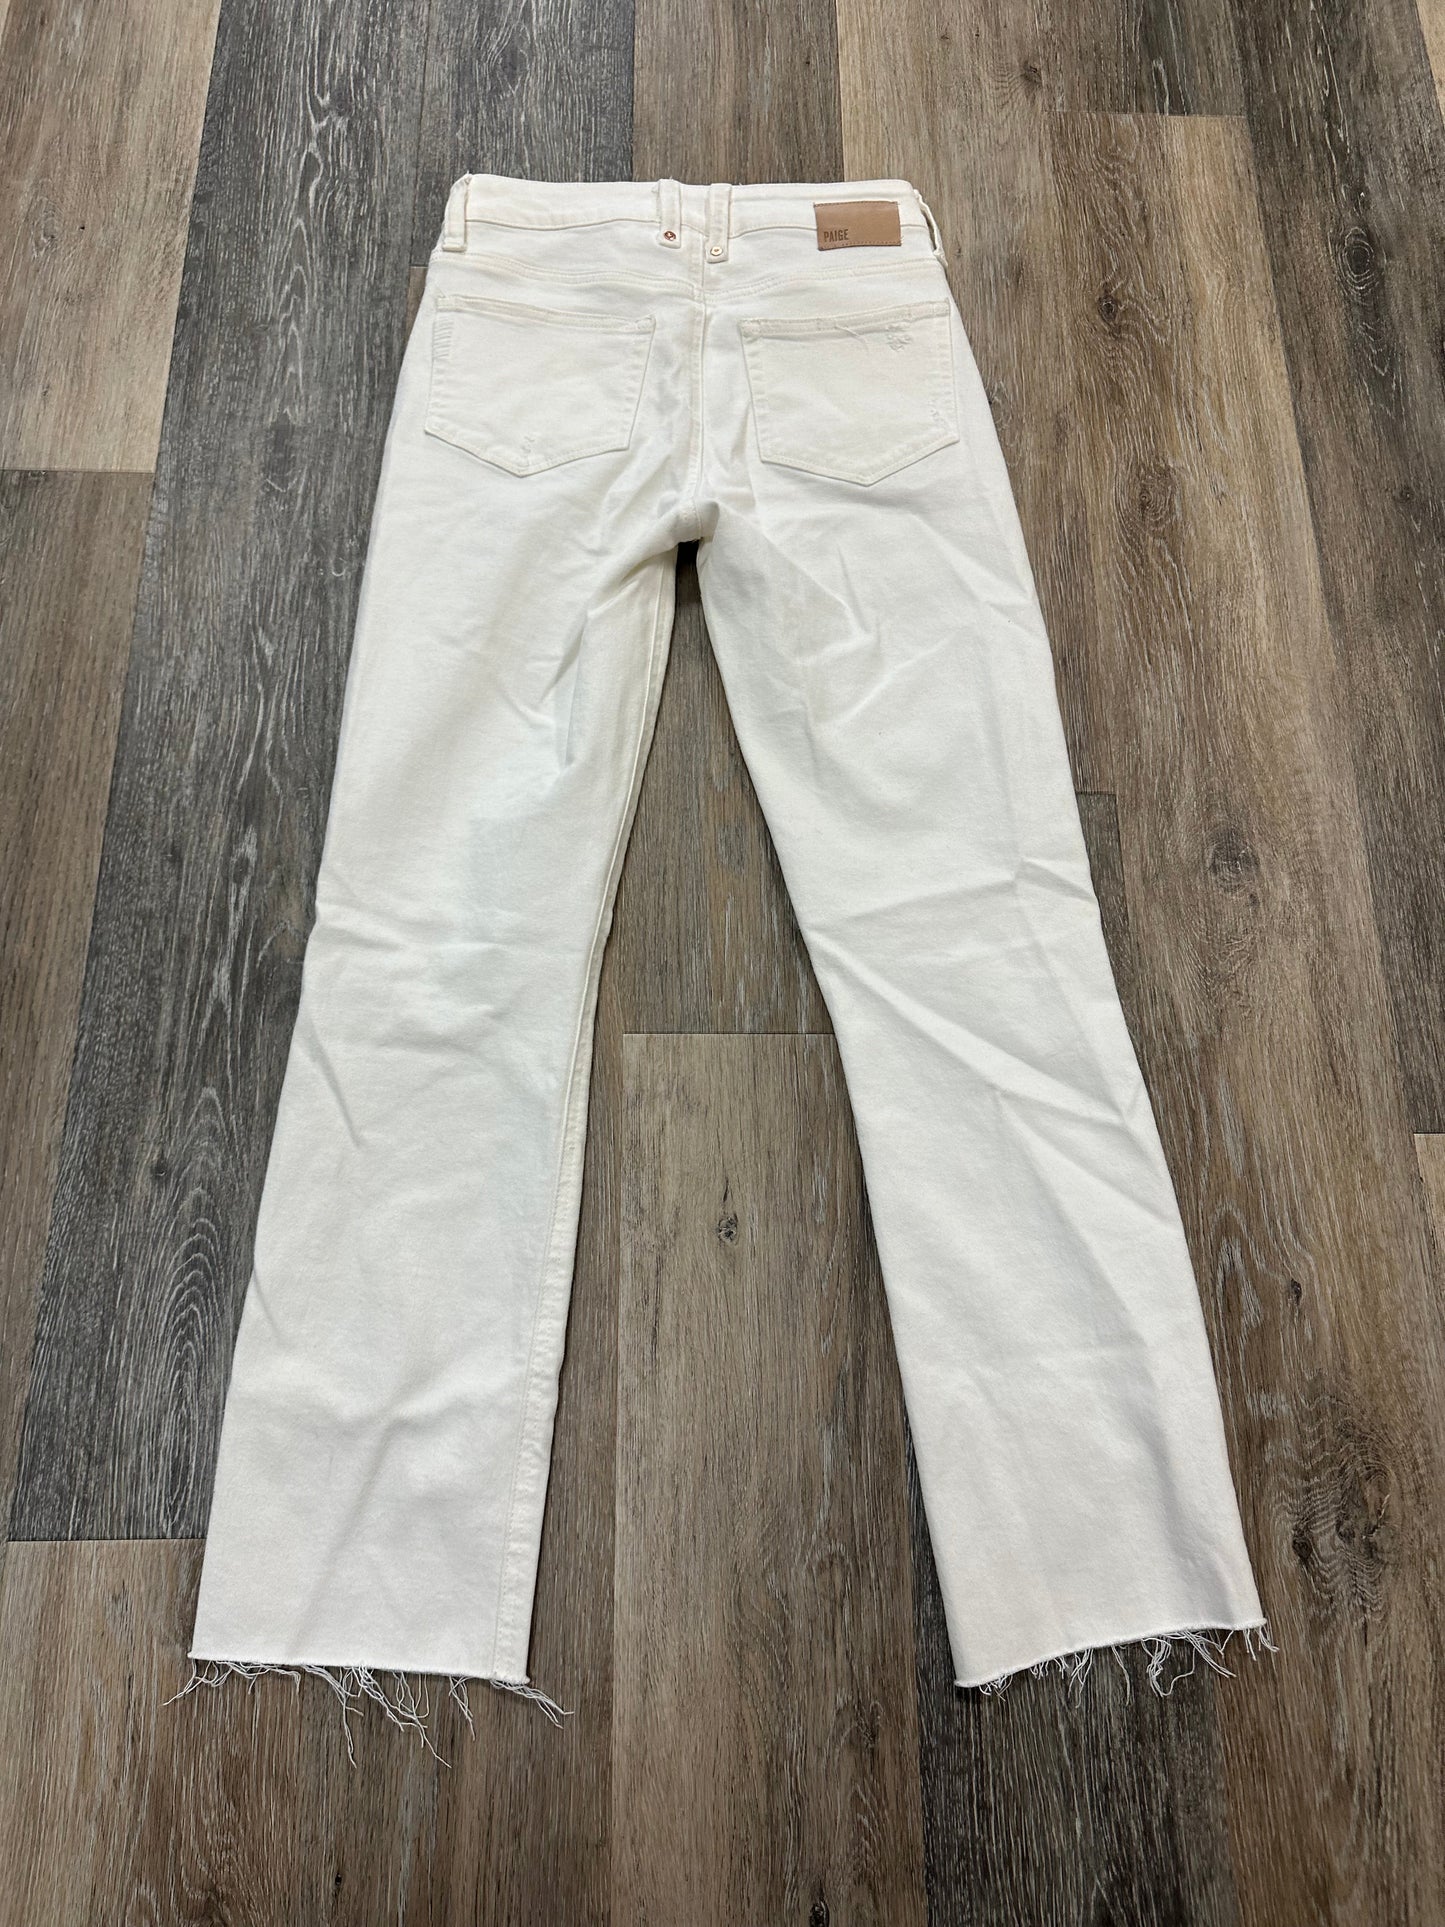 White Denim Jeans Designer Paige, Size 1